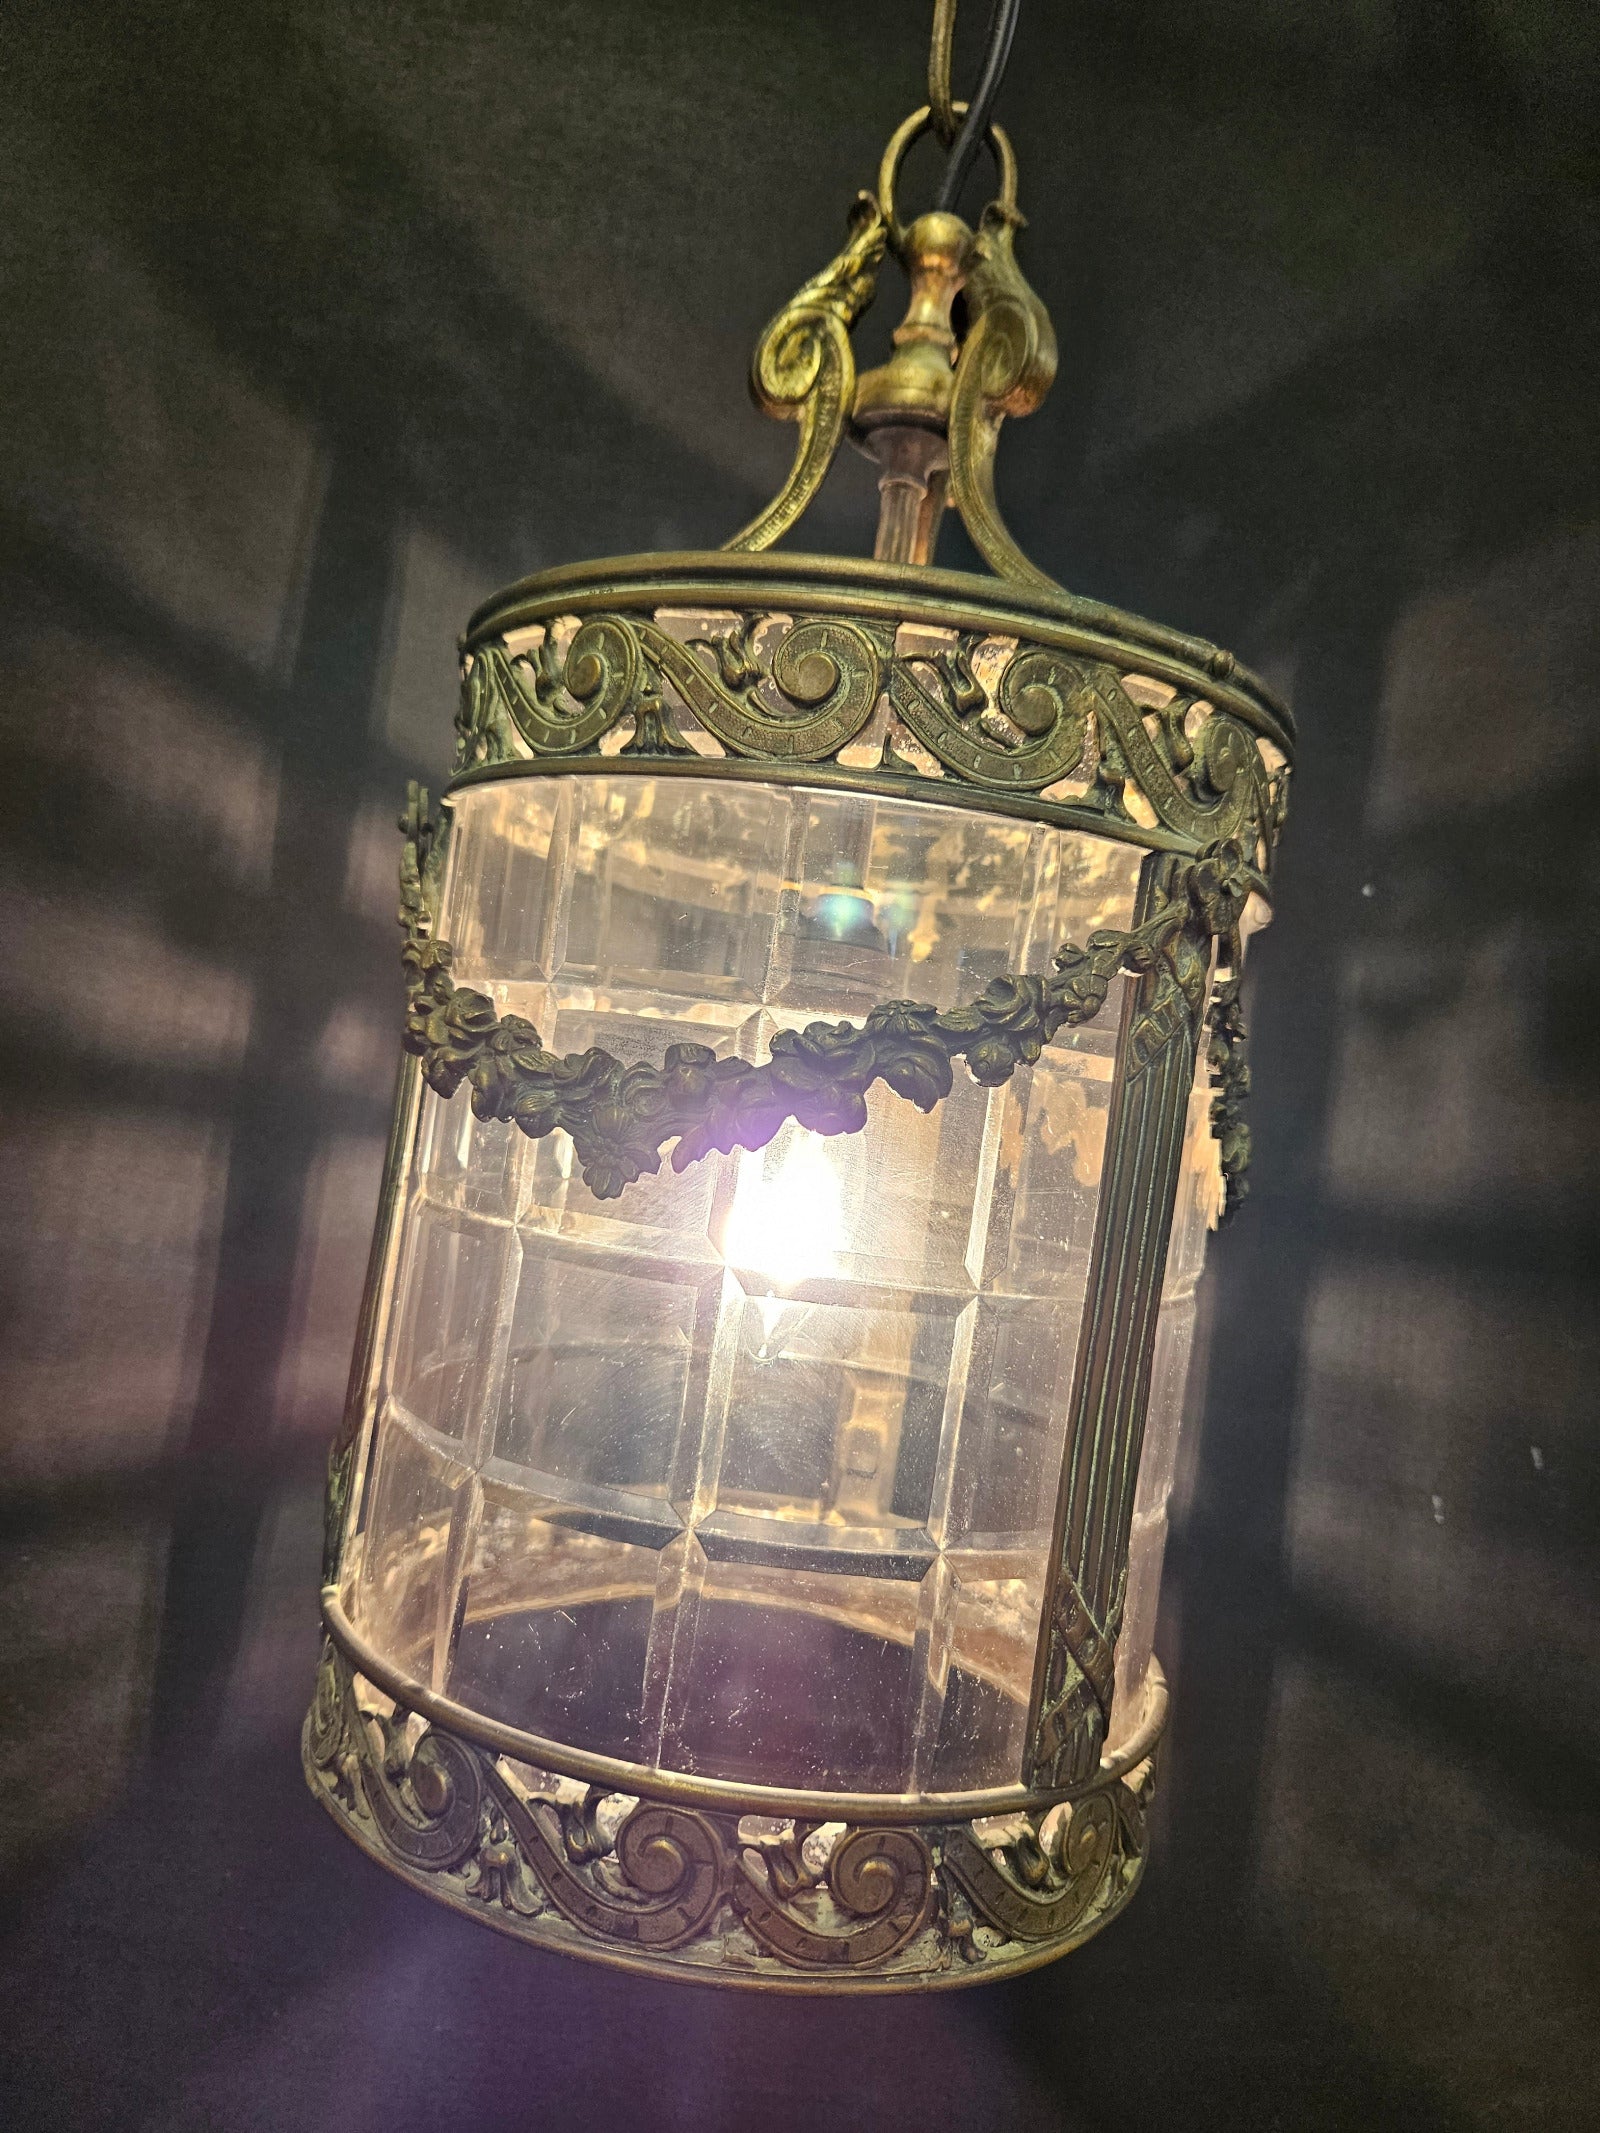 angled view of lantern lit